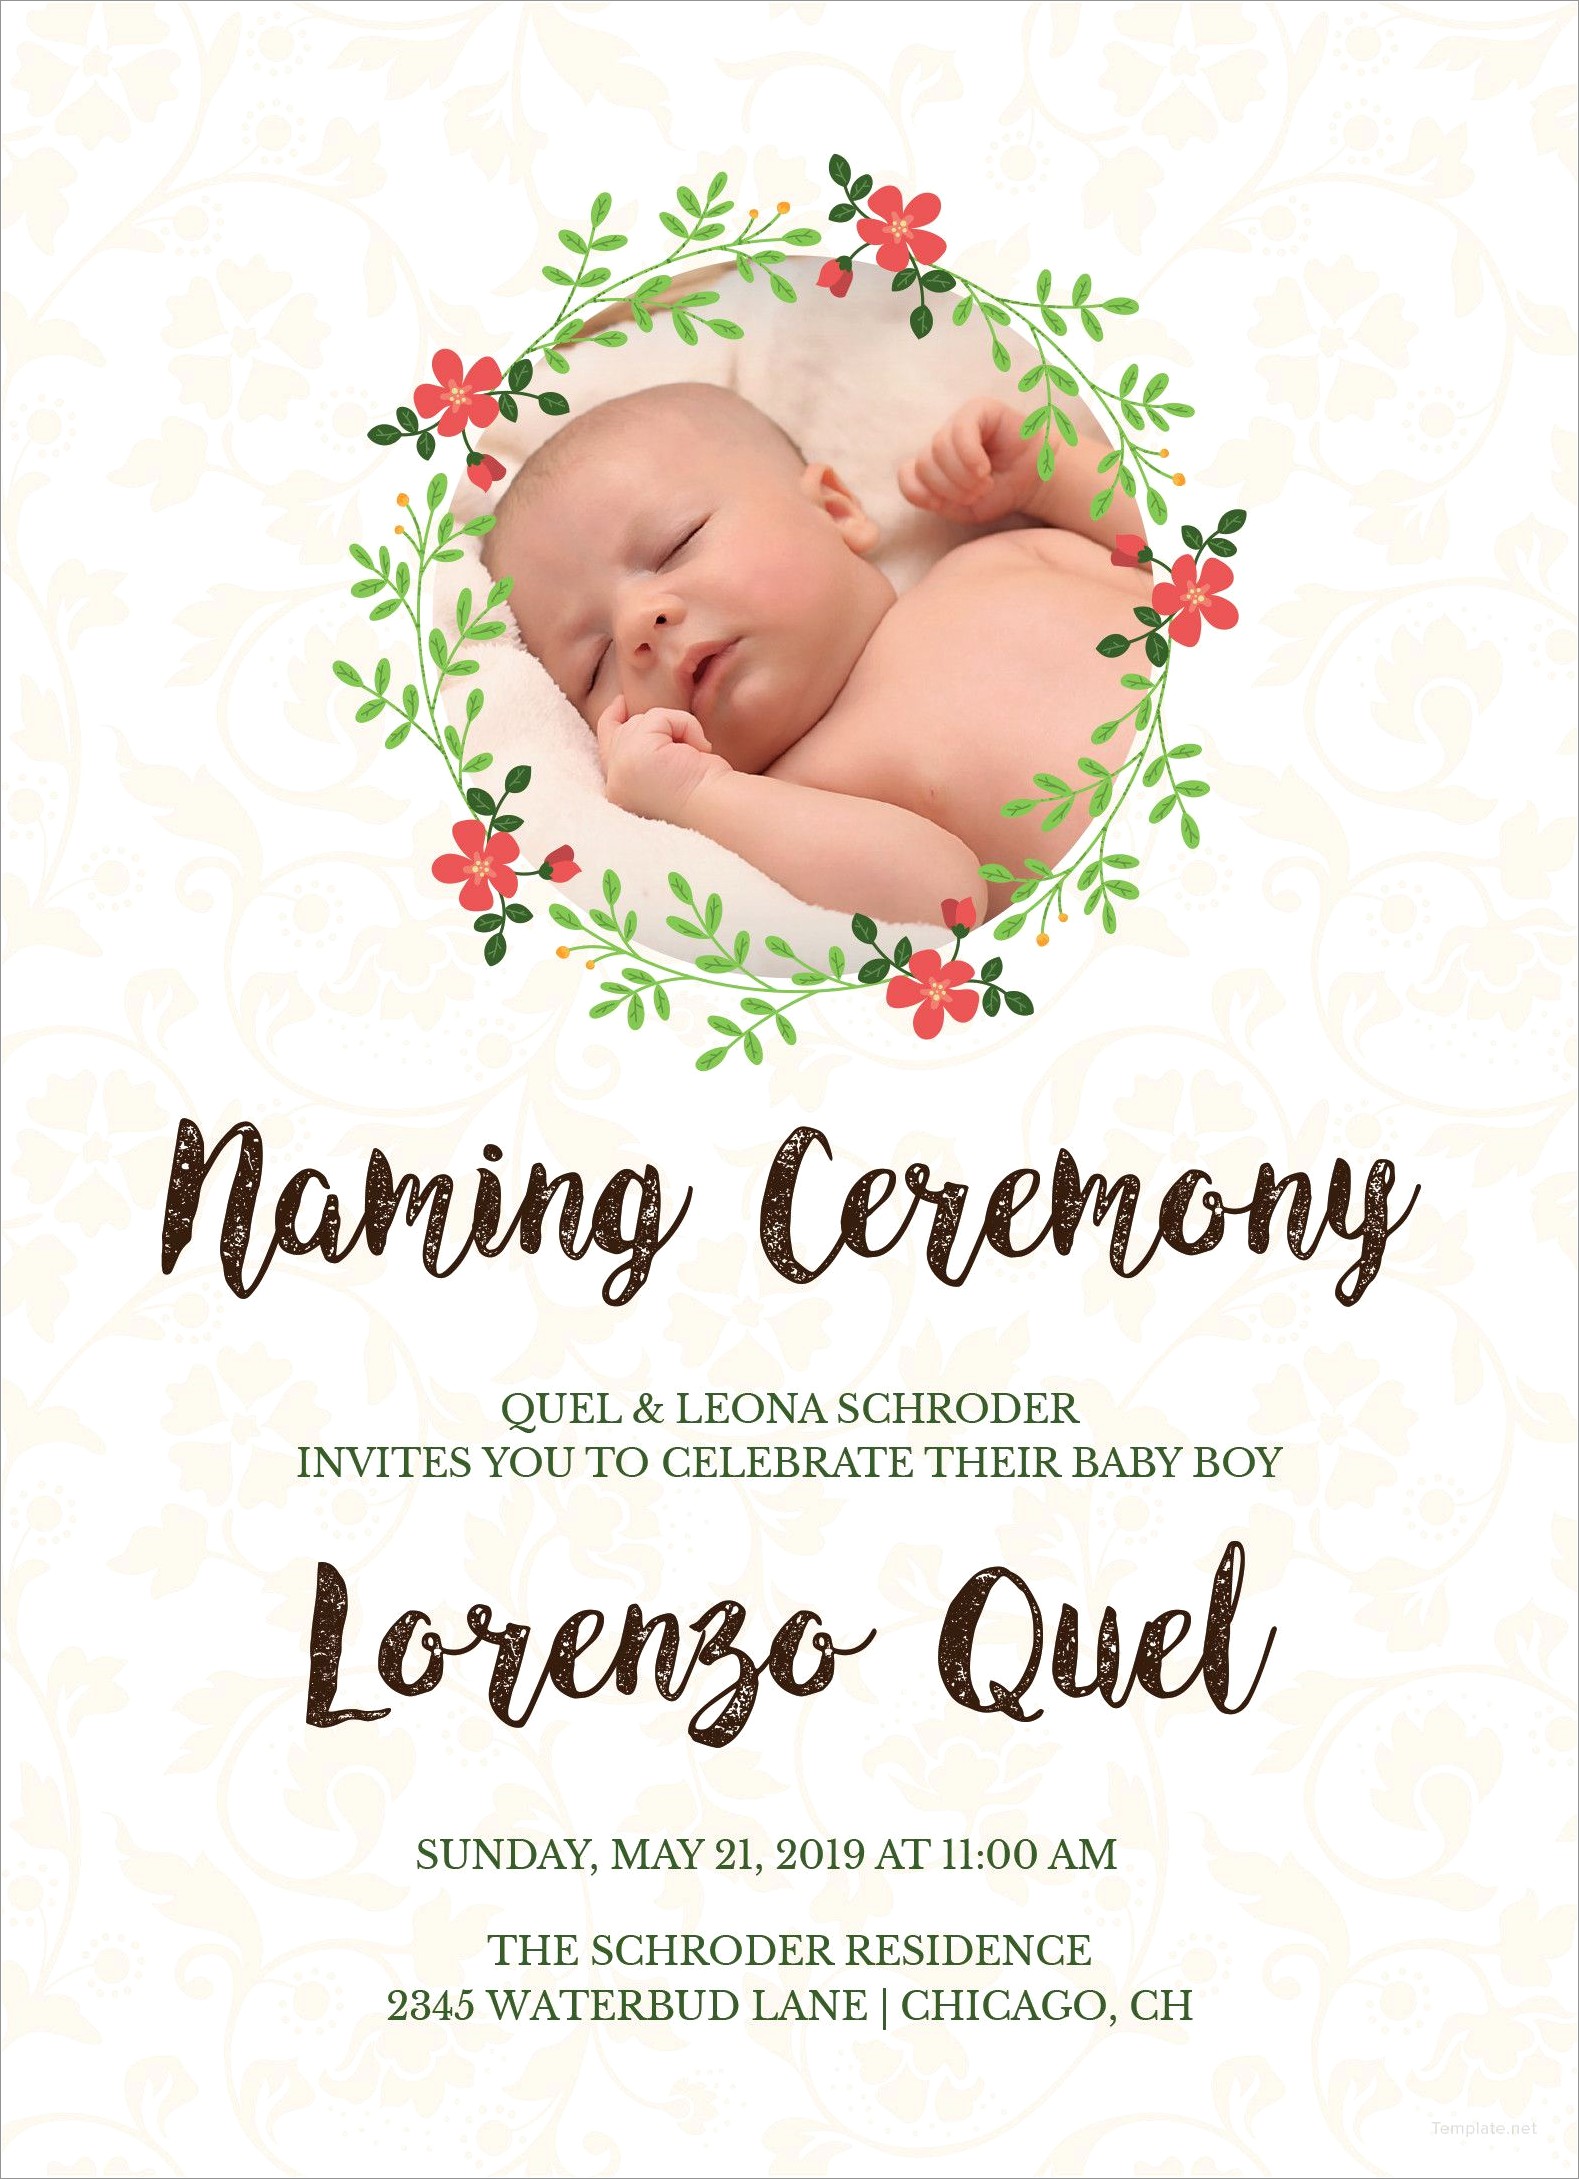 Baby Girl Naming Ceremony Invitation Message